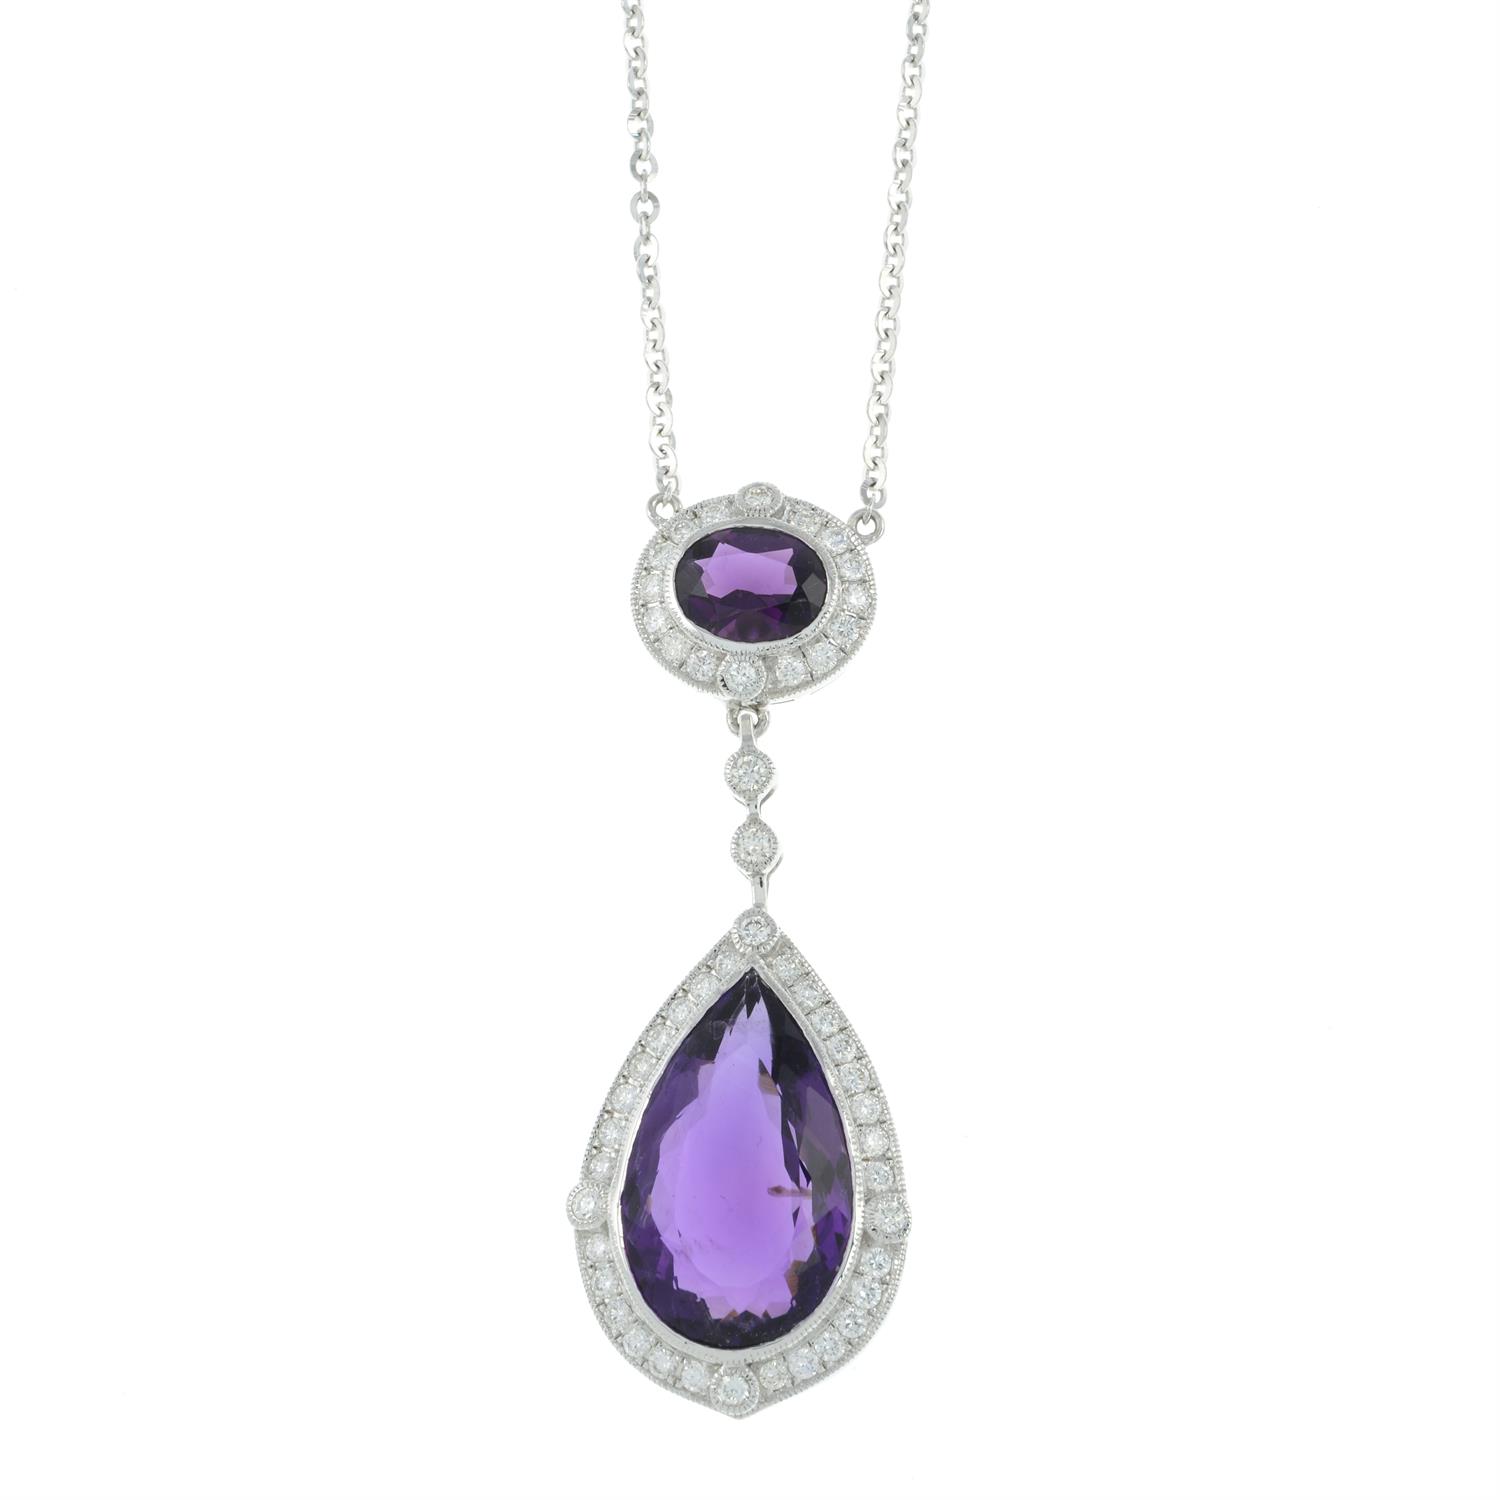 Amethyst and diamond pendant - Image 3 of 5